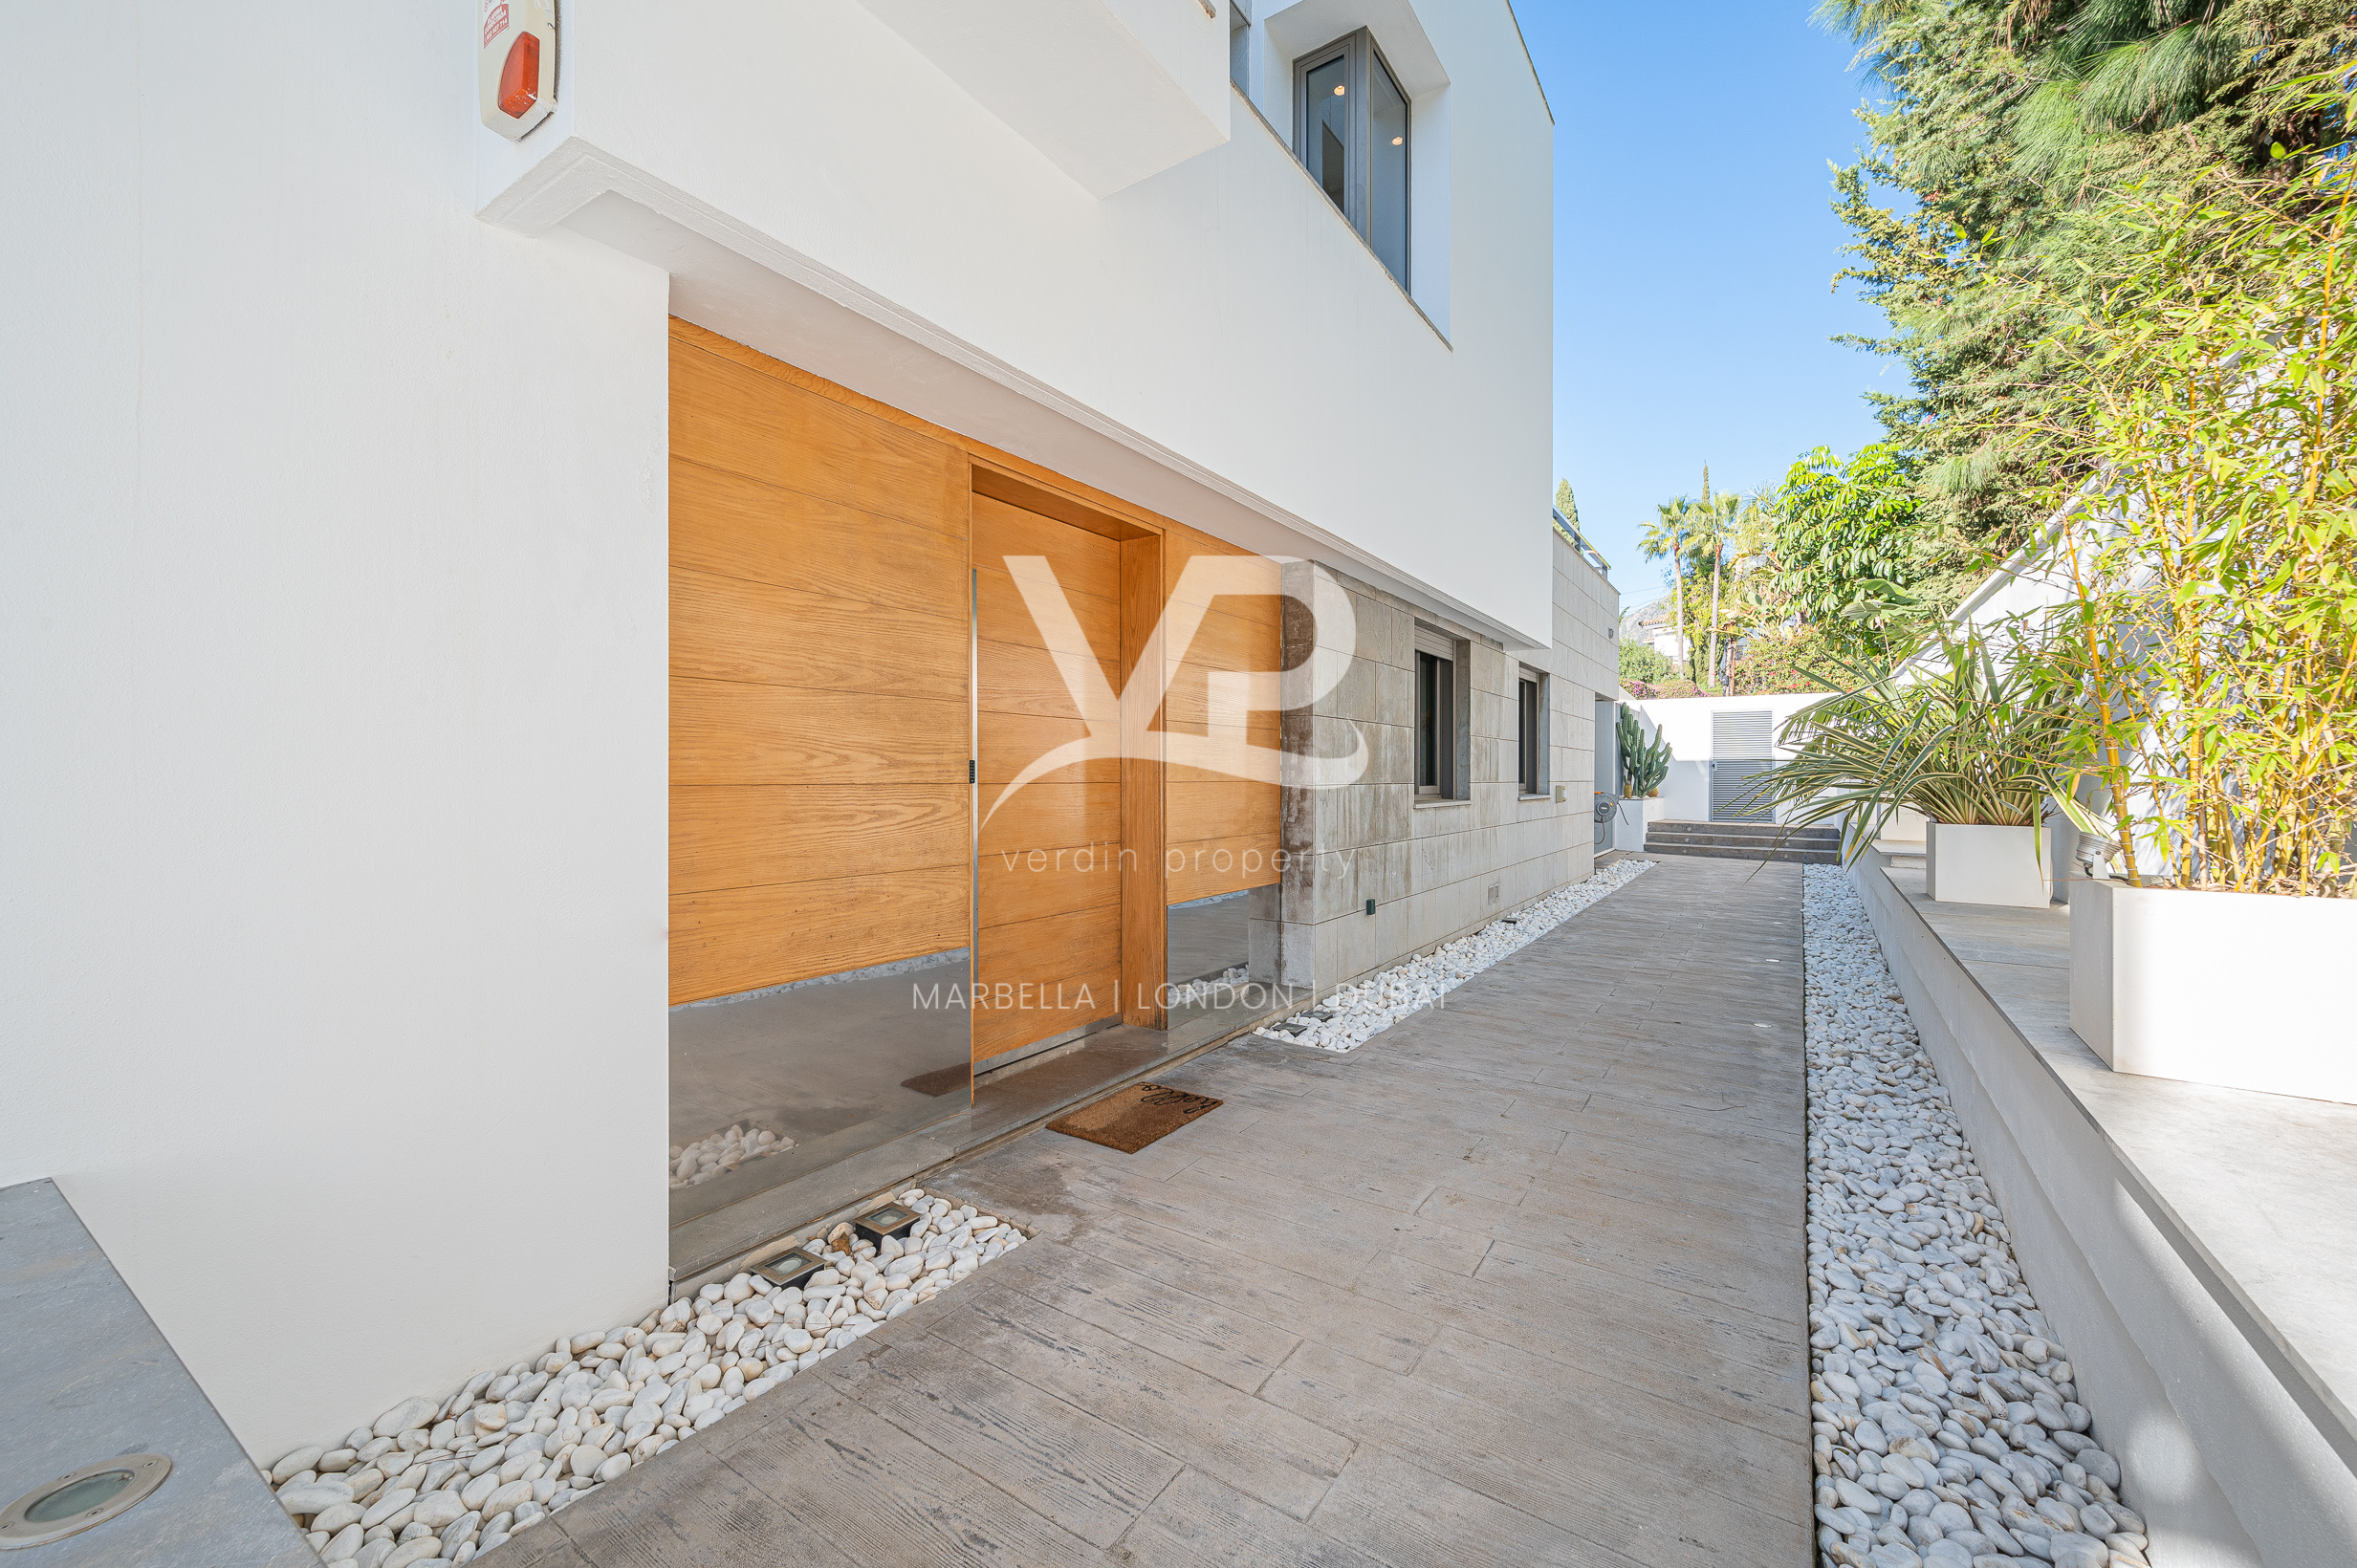 Casa Cubo Marbella - Verdin Property